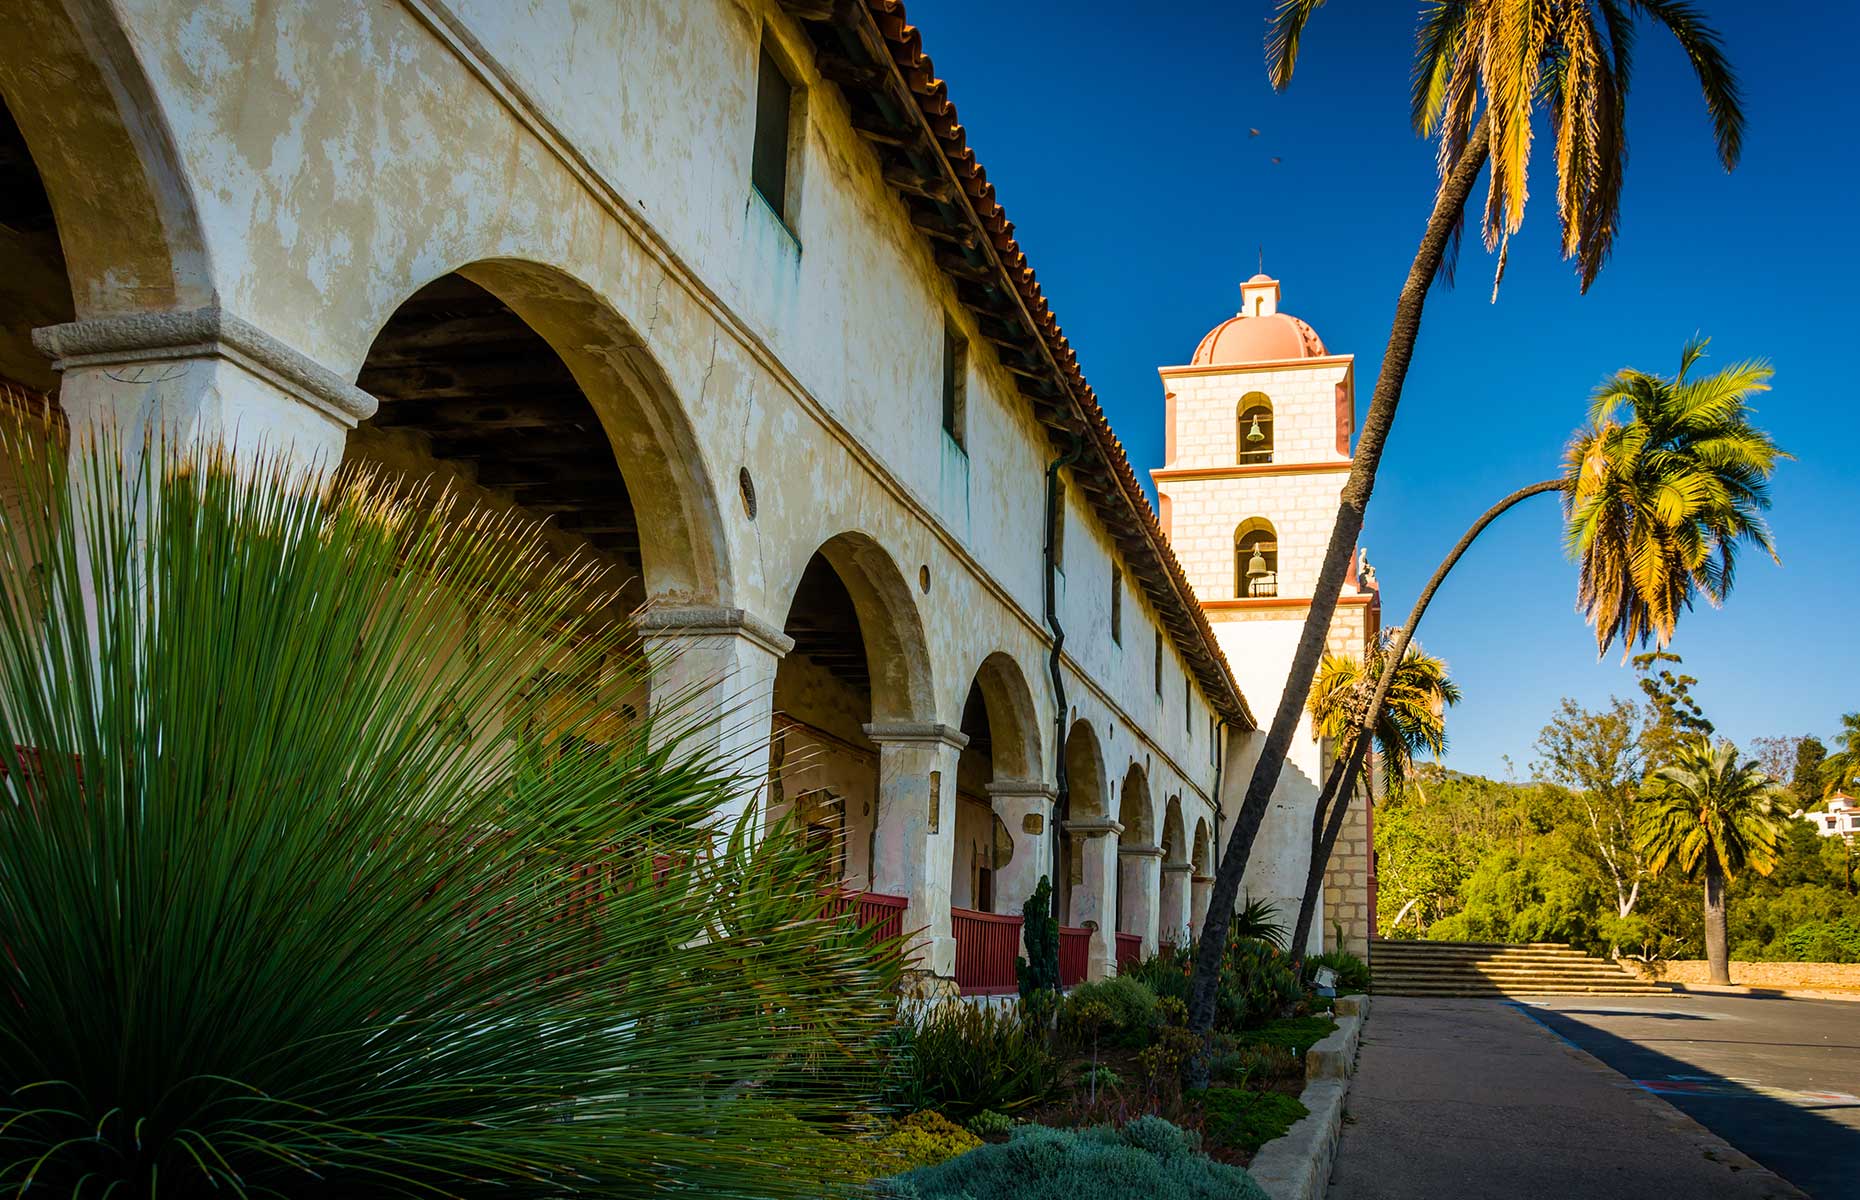 Santa Barbara Mission, California (Image: Jon Bilous/Shutterstock)